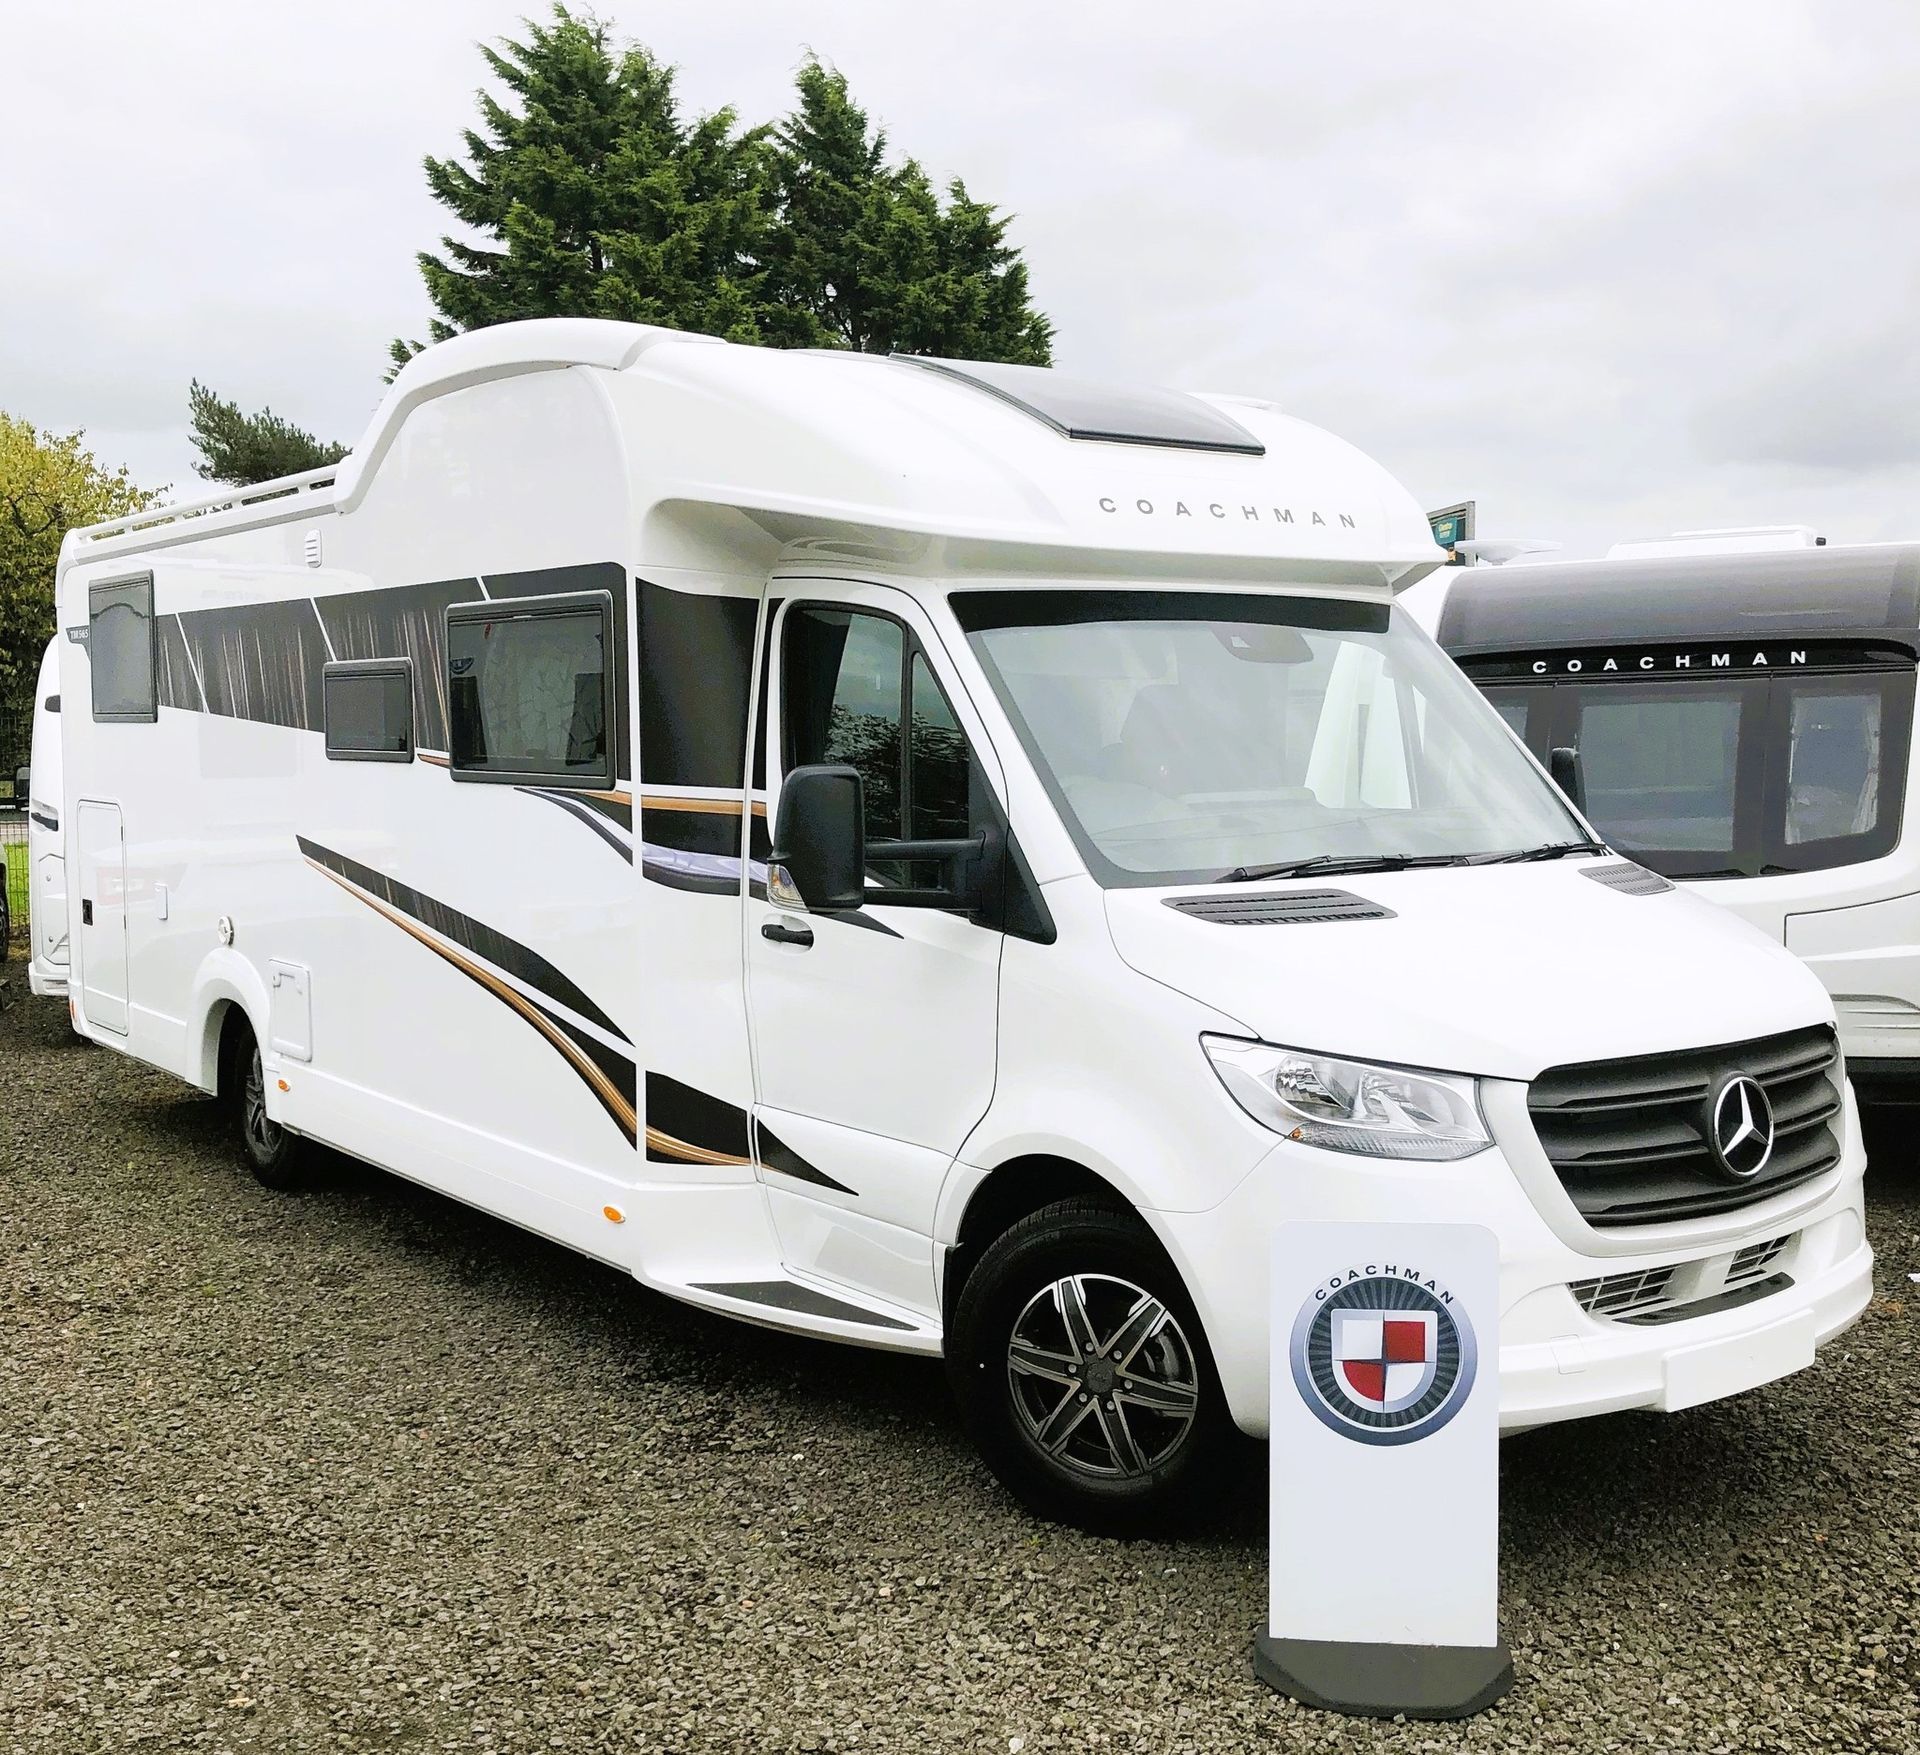 Lisburn Caravan & Motorhomes are the Official Coachman Caravan and Motorhome Dealer for Northern Ireland.